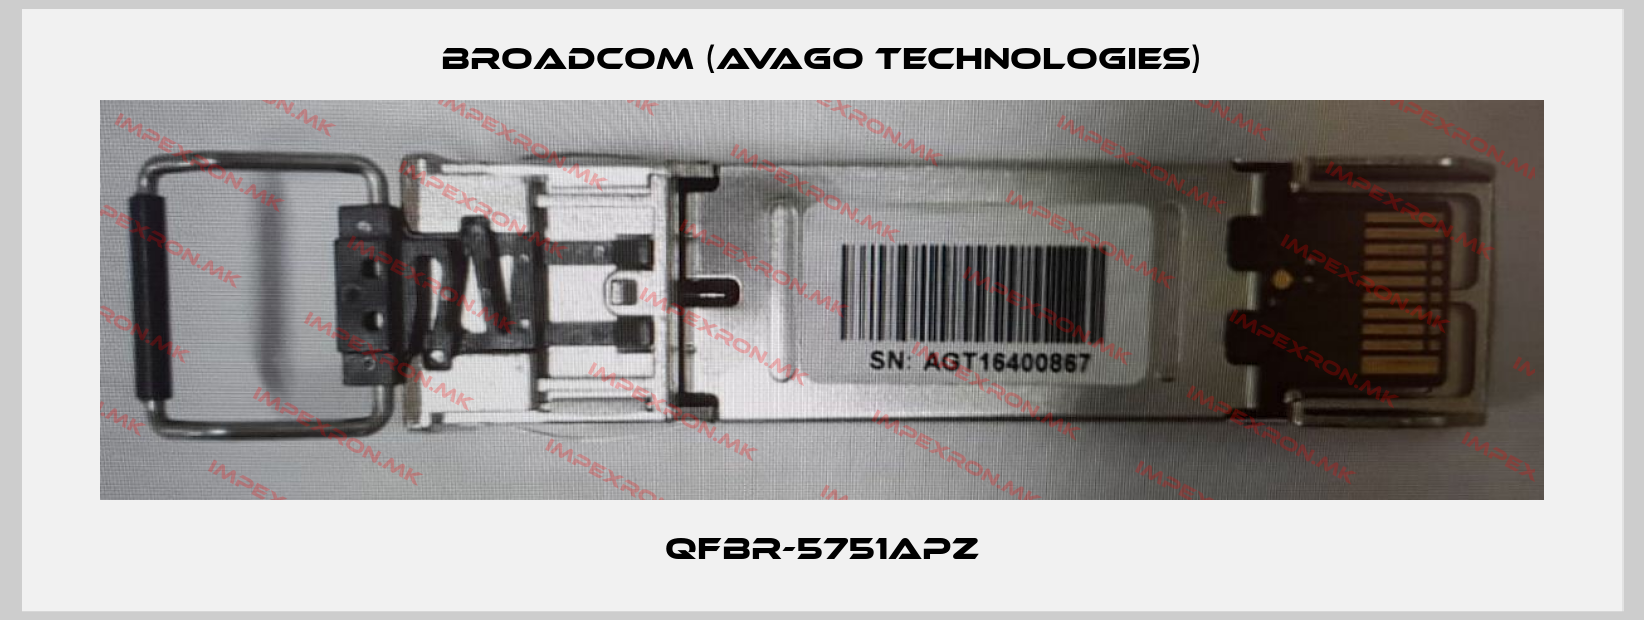 Broadcom (Avago Technologies)-QFBR-5751APZprice